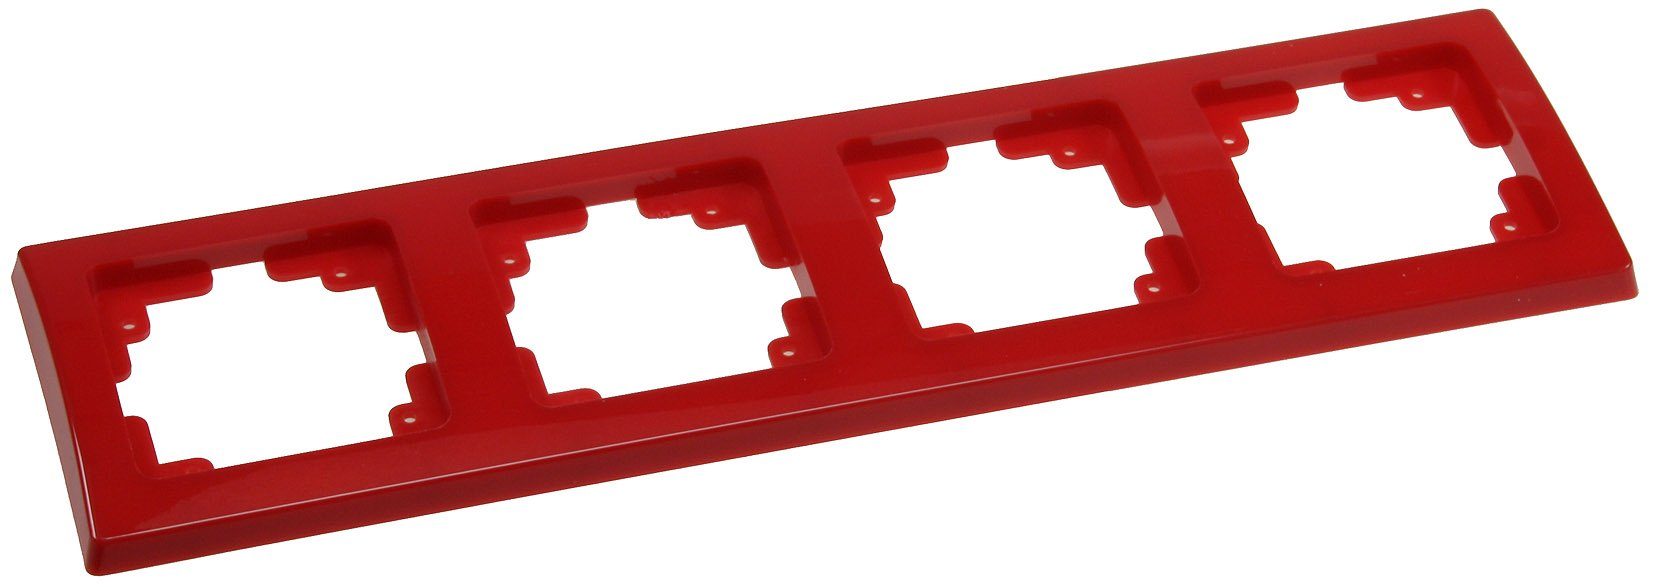 Steckdose rot 4-fach DELPHI Rahmen, ChiliTec